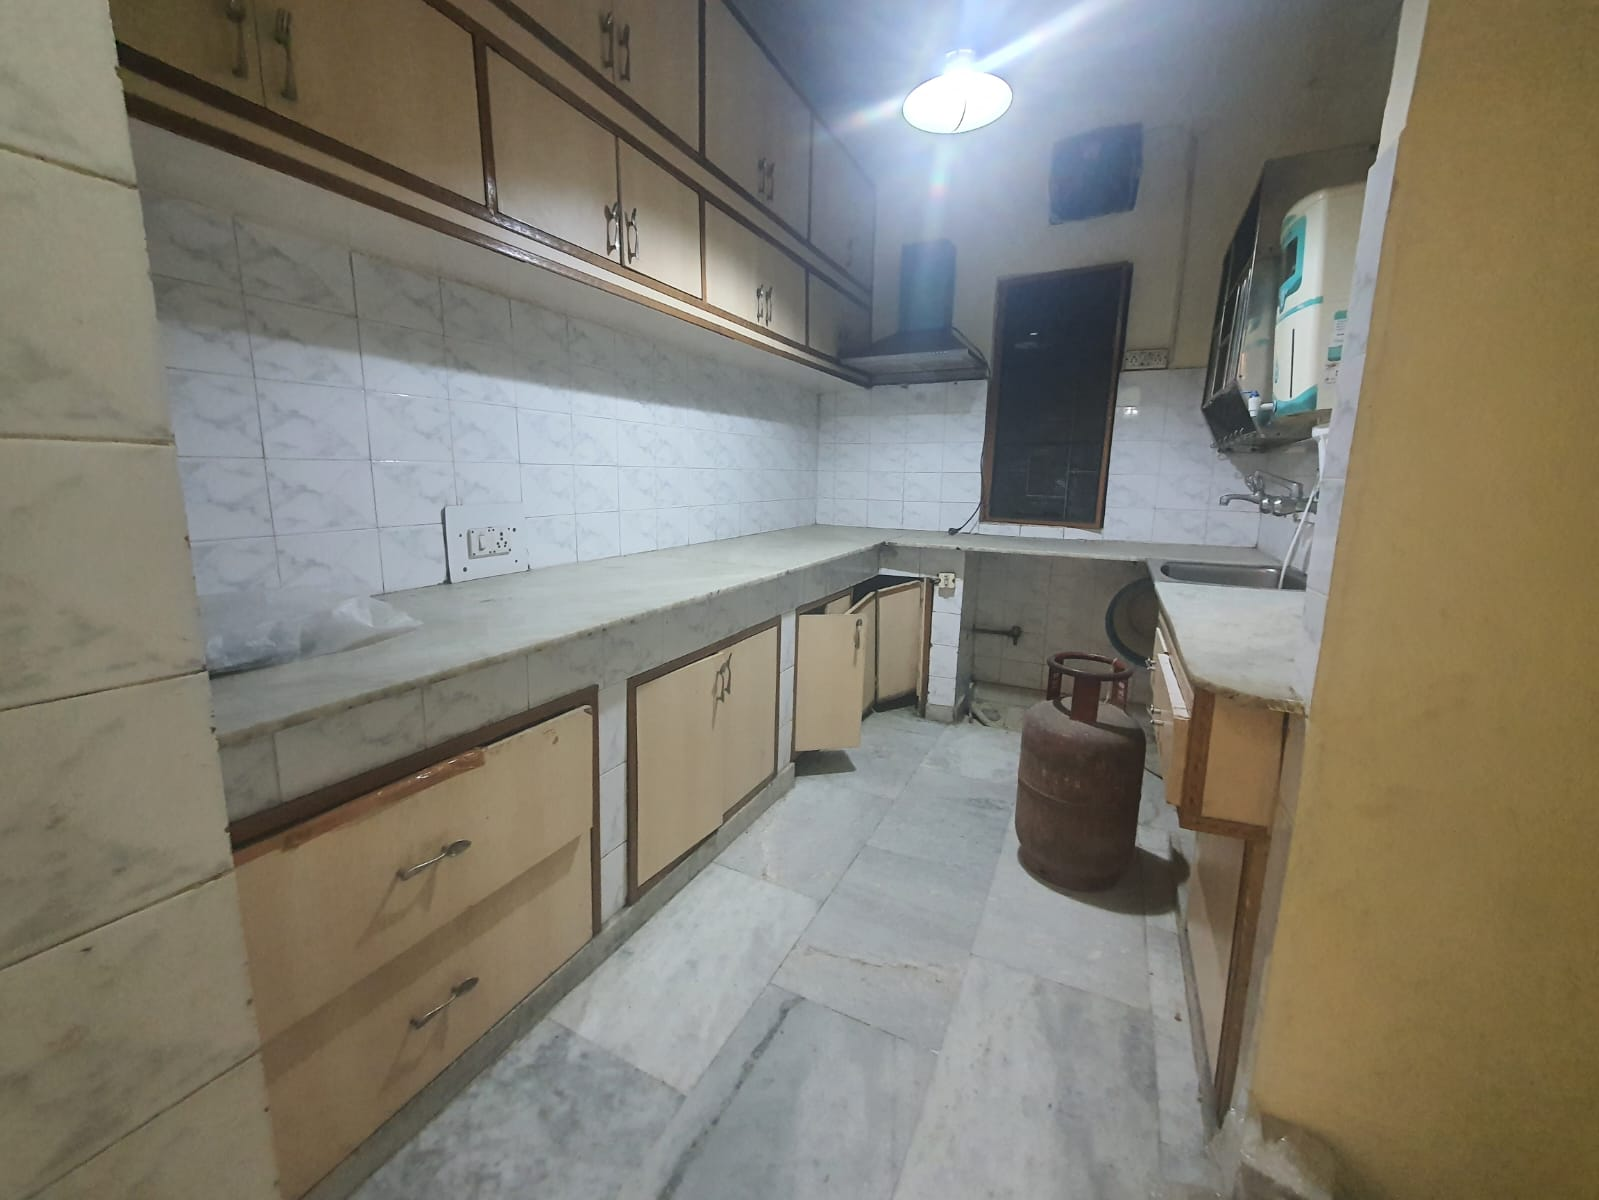 Luxurious Living: 2 BHK for Rent in C4D Block, Janakpuri | Park Views, Modern Kitchen, Ideal for Families | Janakpuri Homes